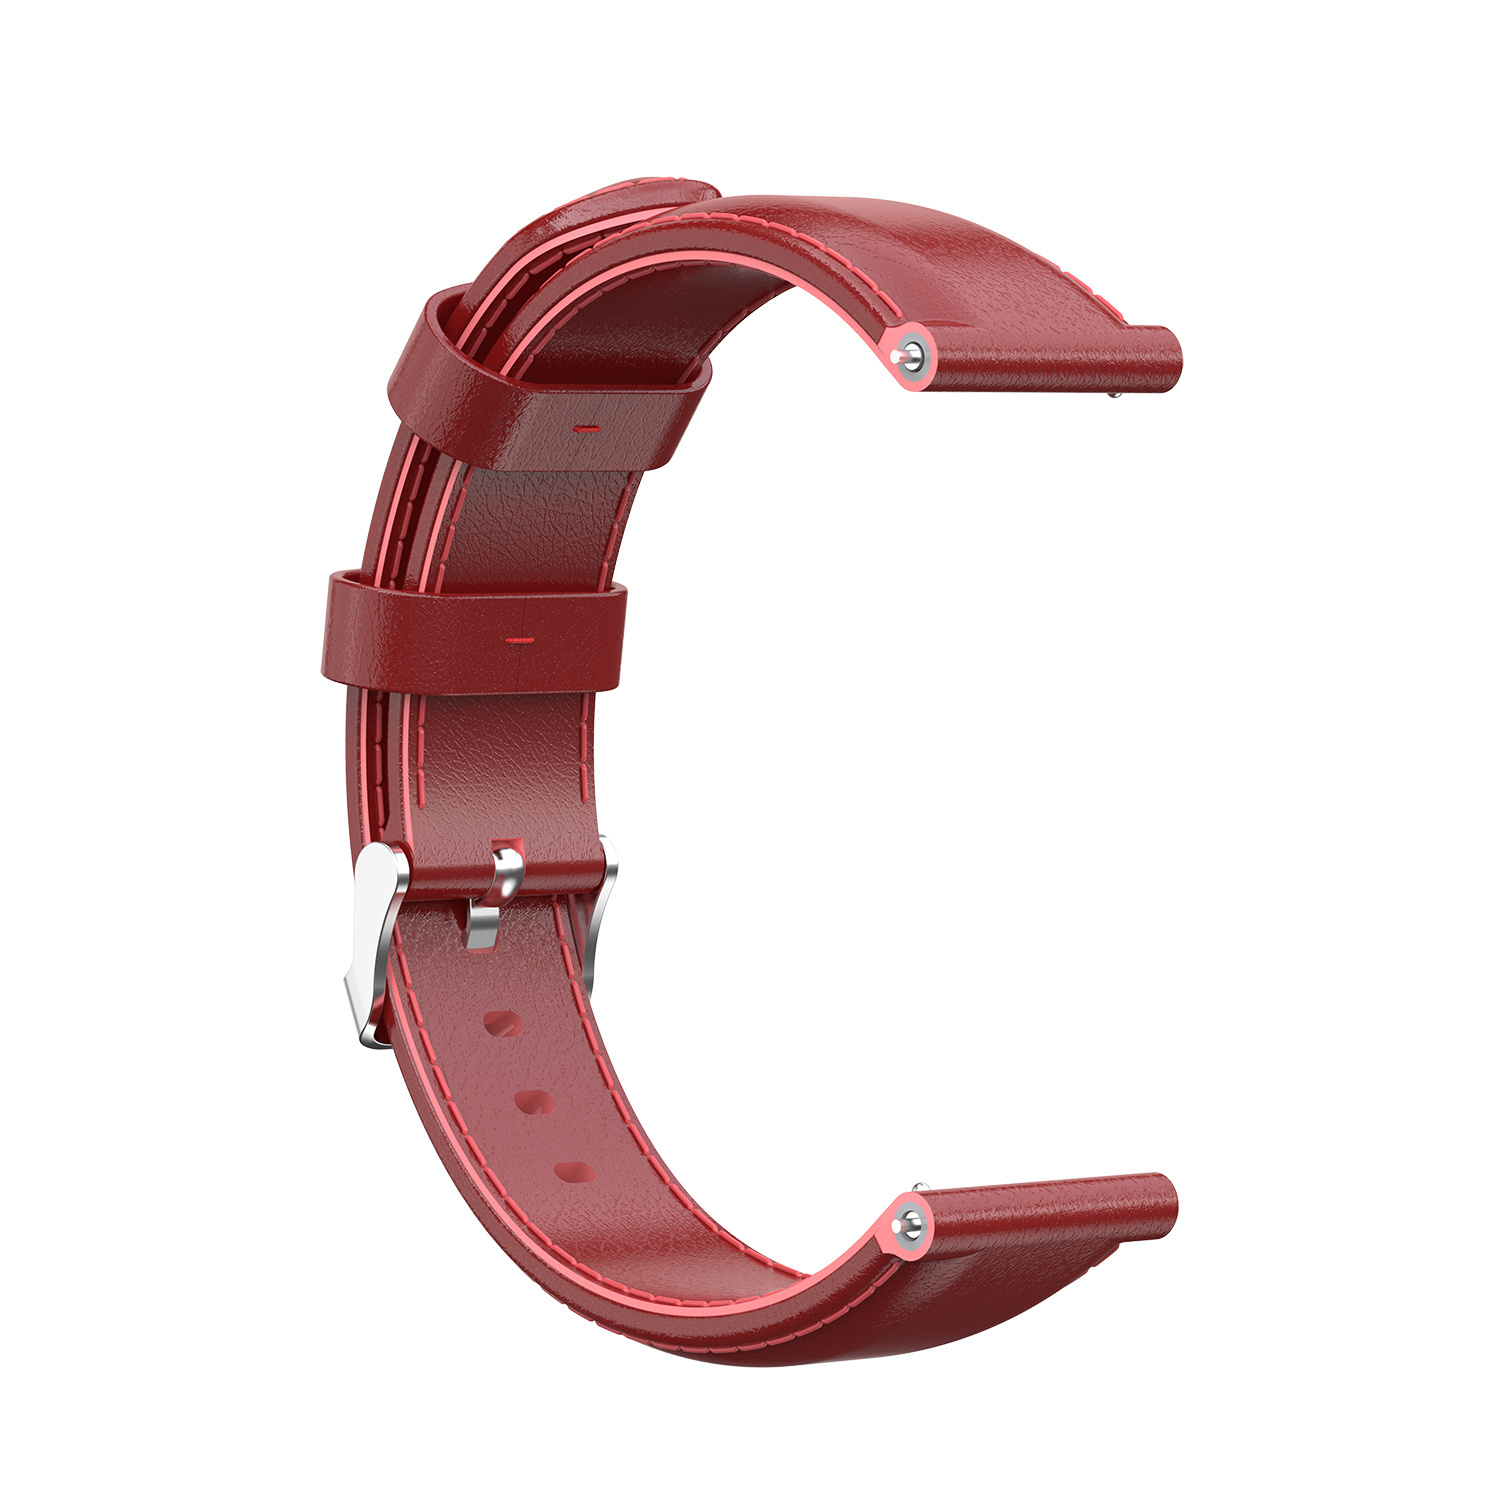 Samsung Galaxy Watch Leather Strap - Red